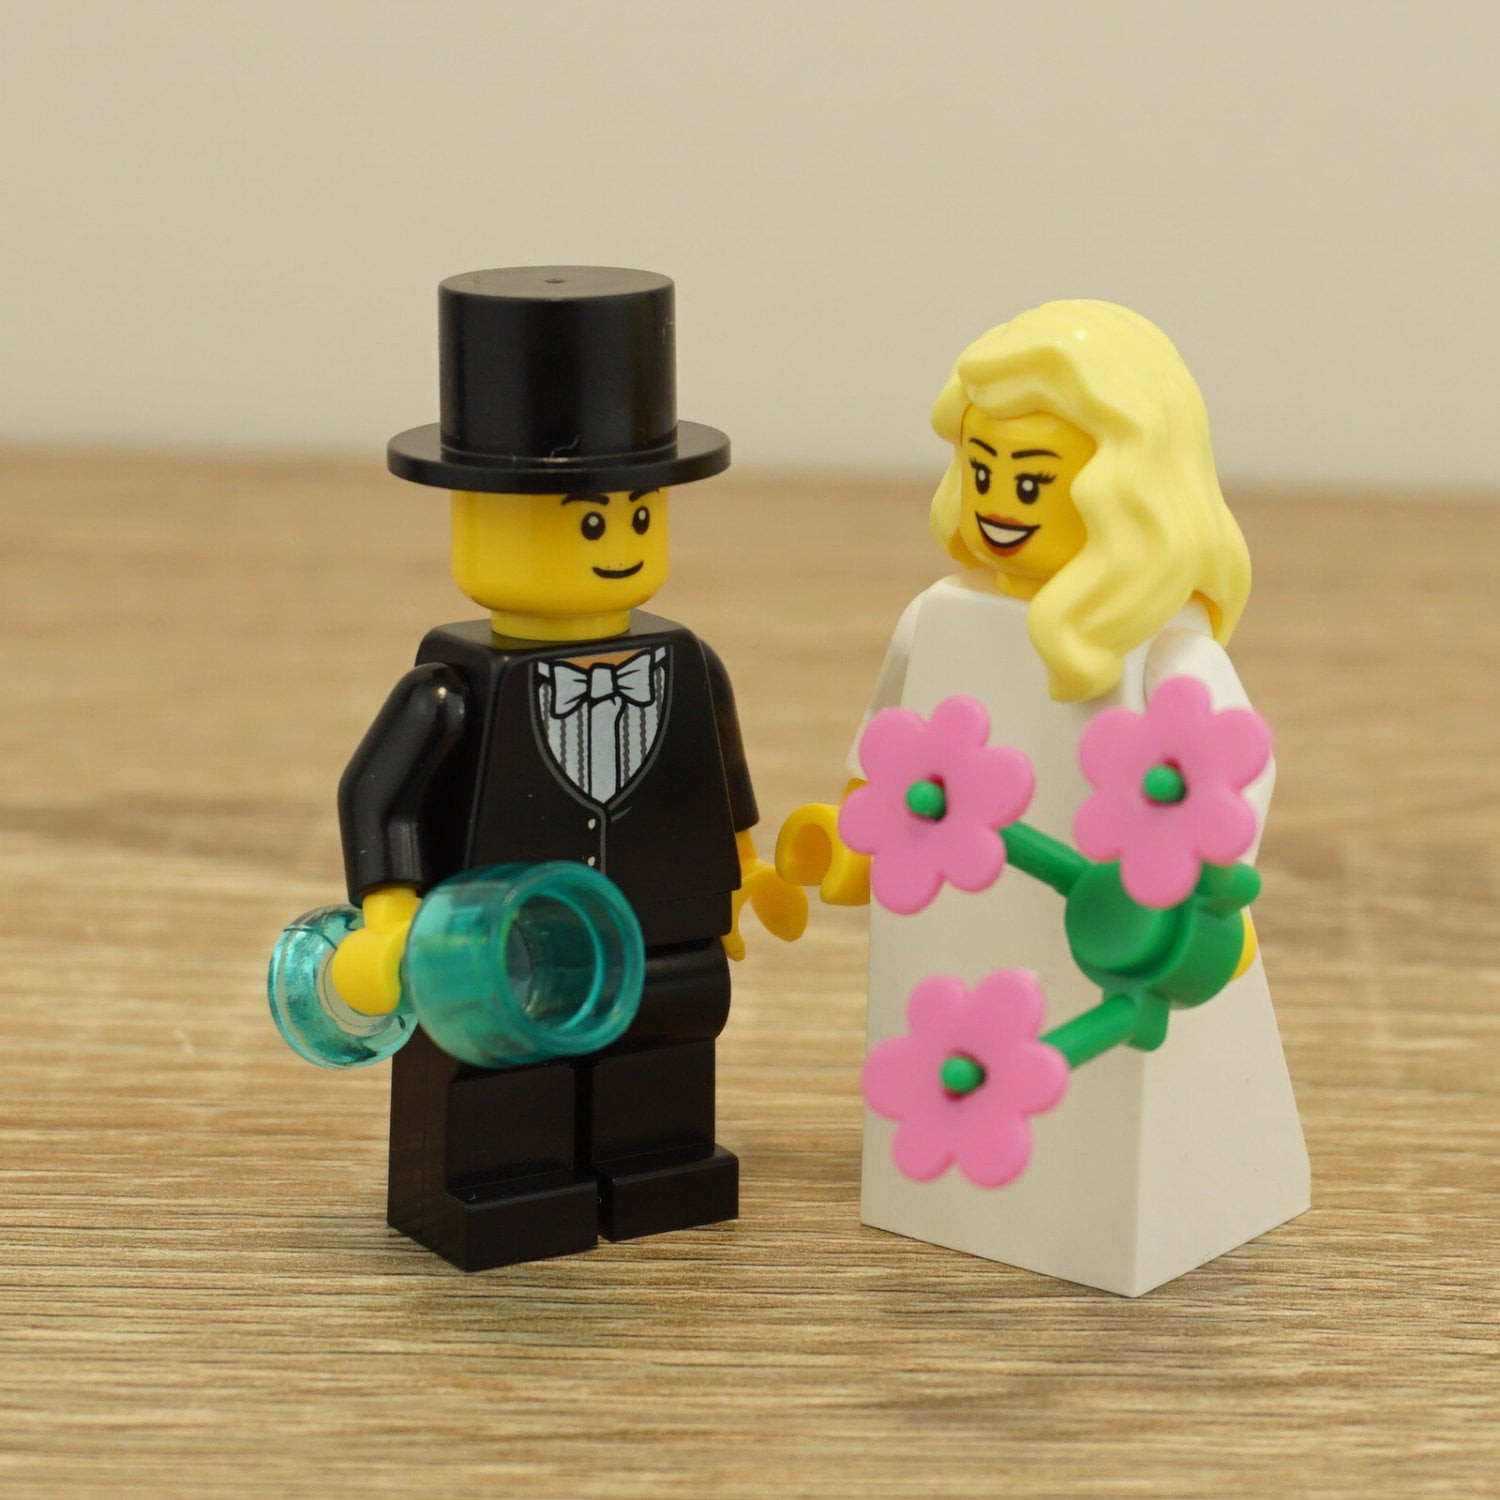 Lego Birthday Cake Topper
 Lego bride and groom Lego cake topper Lego cake toppers